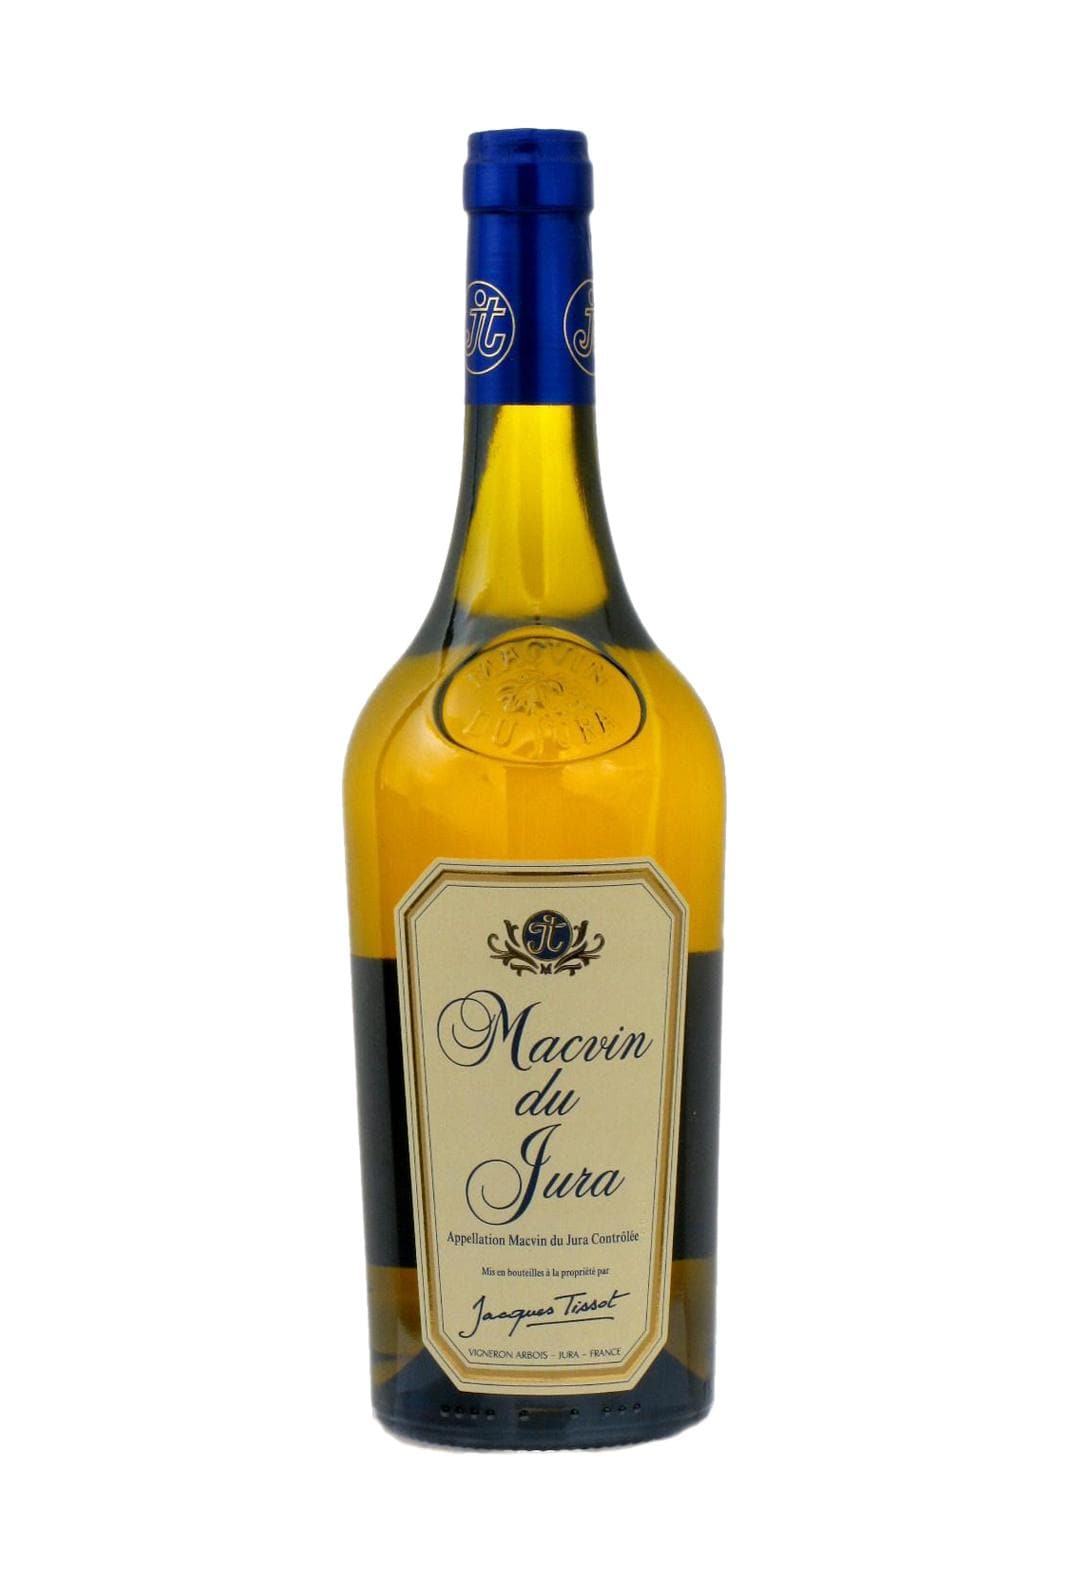 Tissot Macvin Blanc du Jura 17% 750ml | Liquor & Spirits | Shop online at Spirits of France